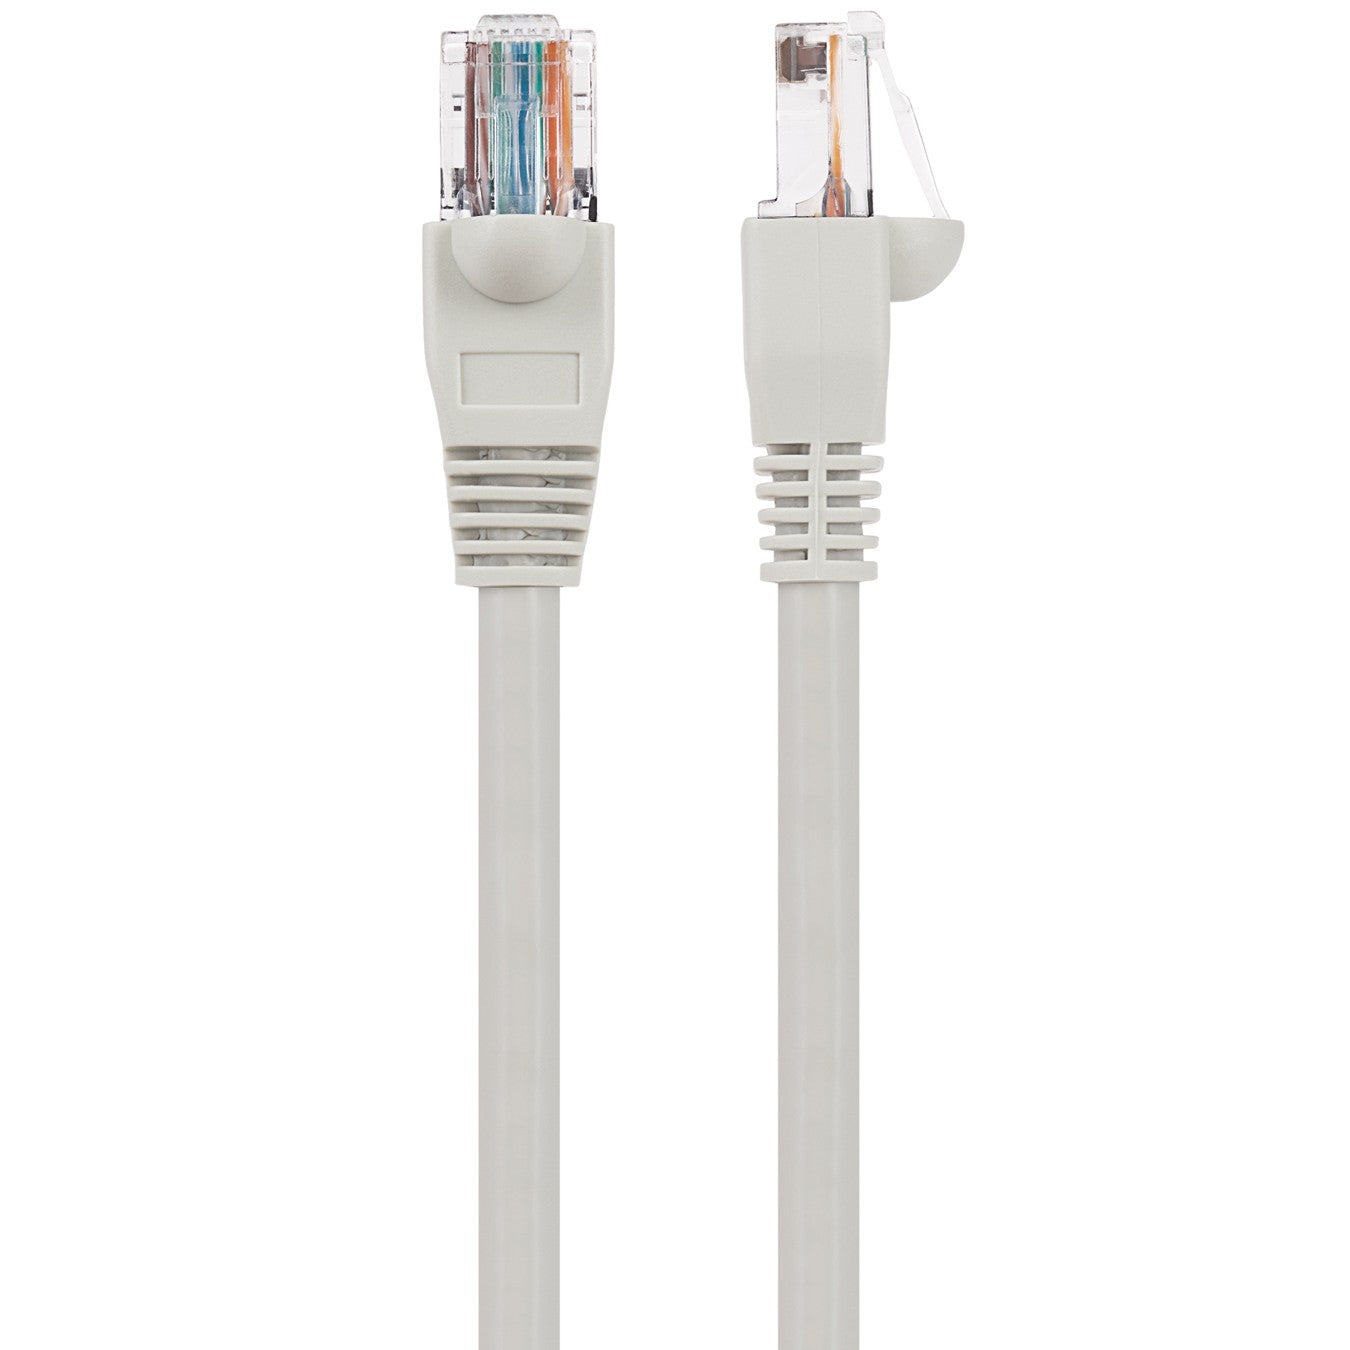 Maplin CAT6 RJ45 Ethernet Cable - Grey, 10m, Cables